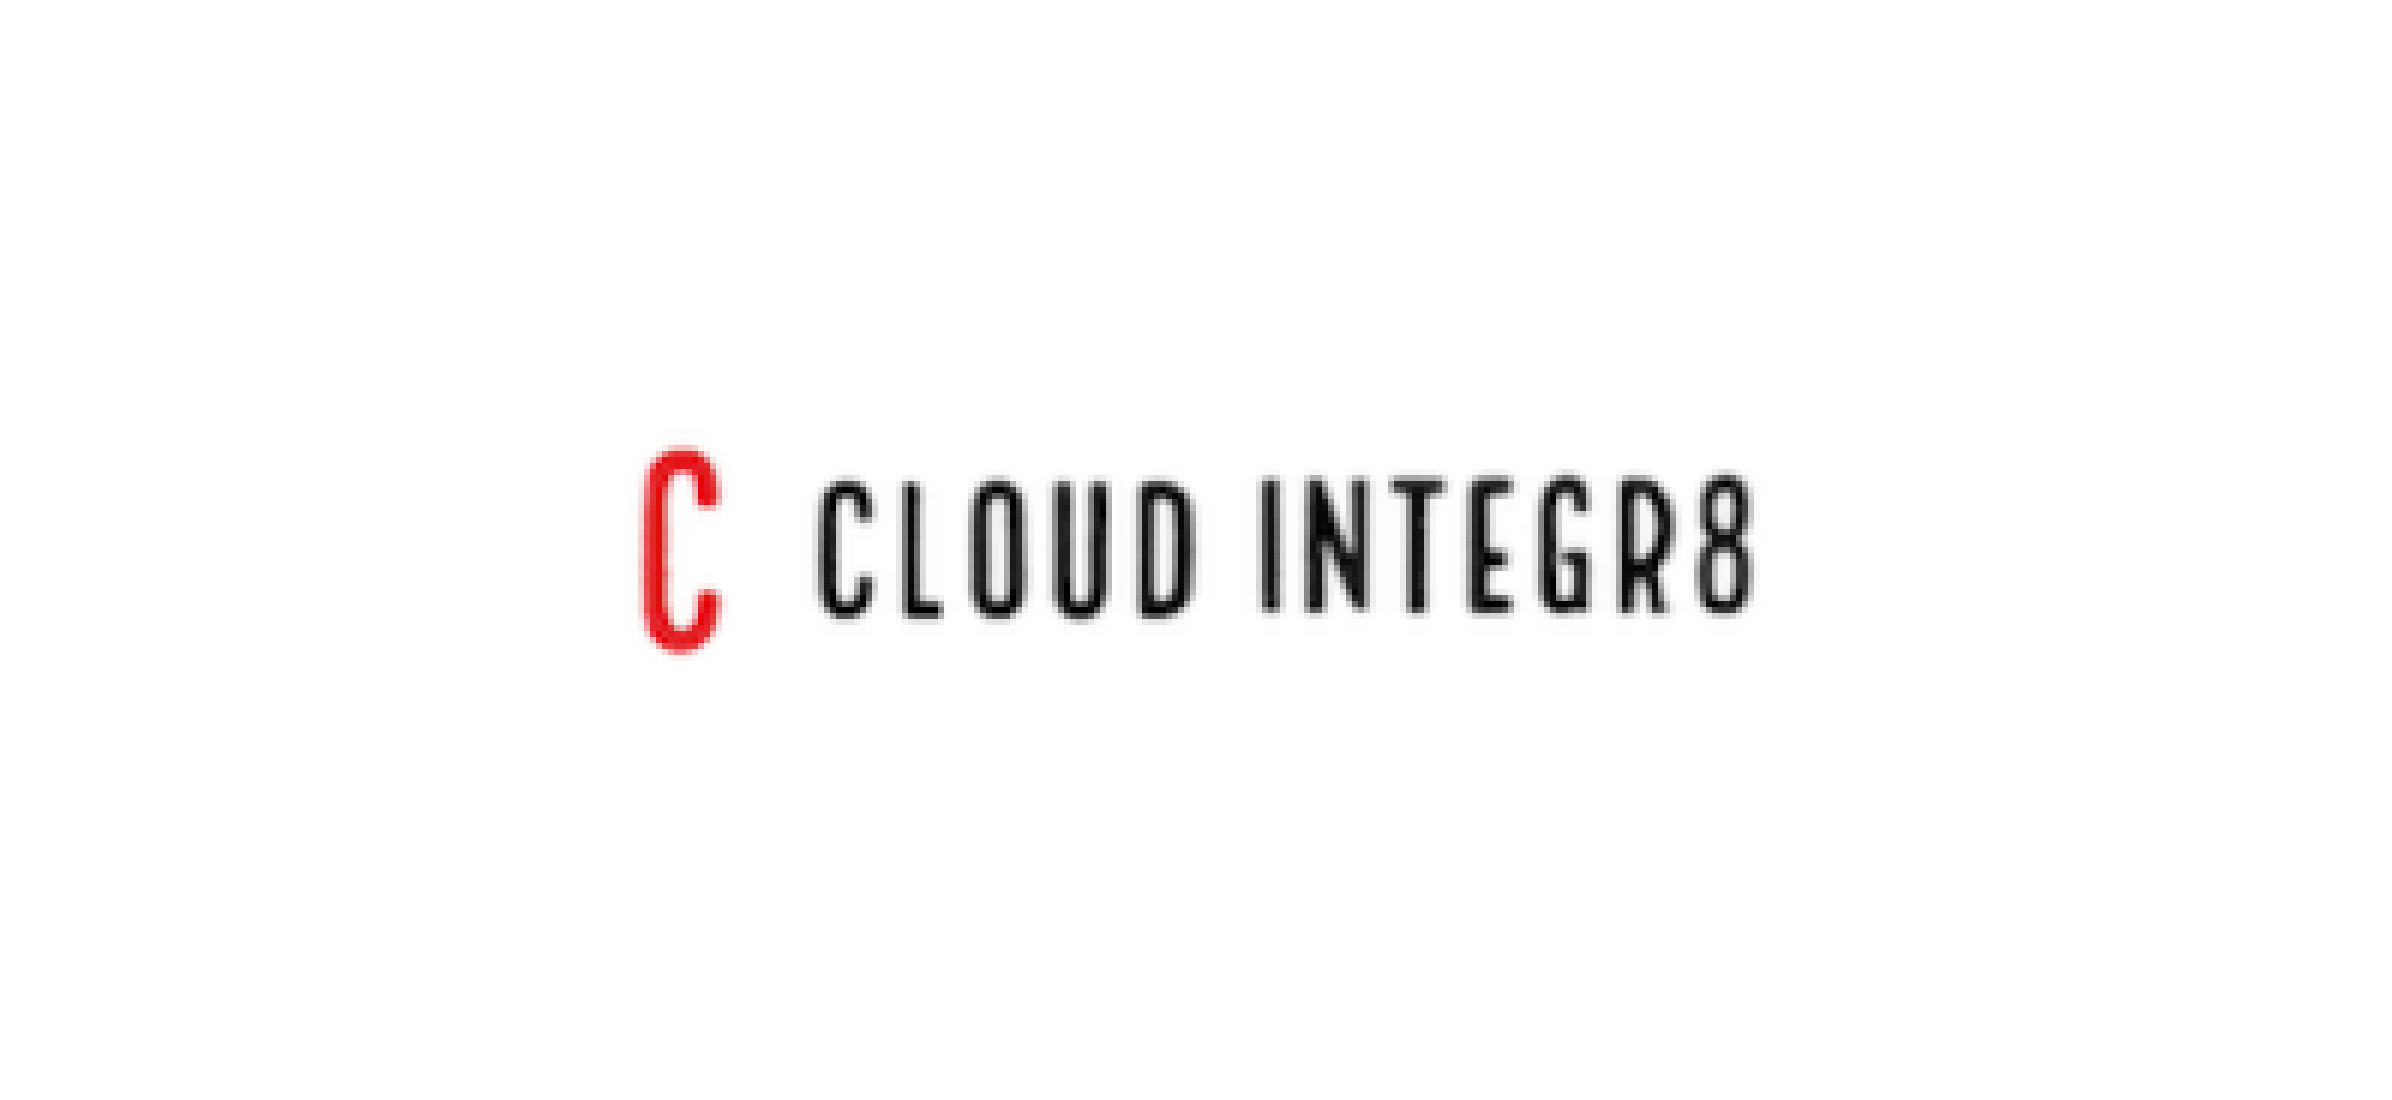 The Cloud Integr8 logo